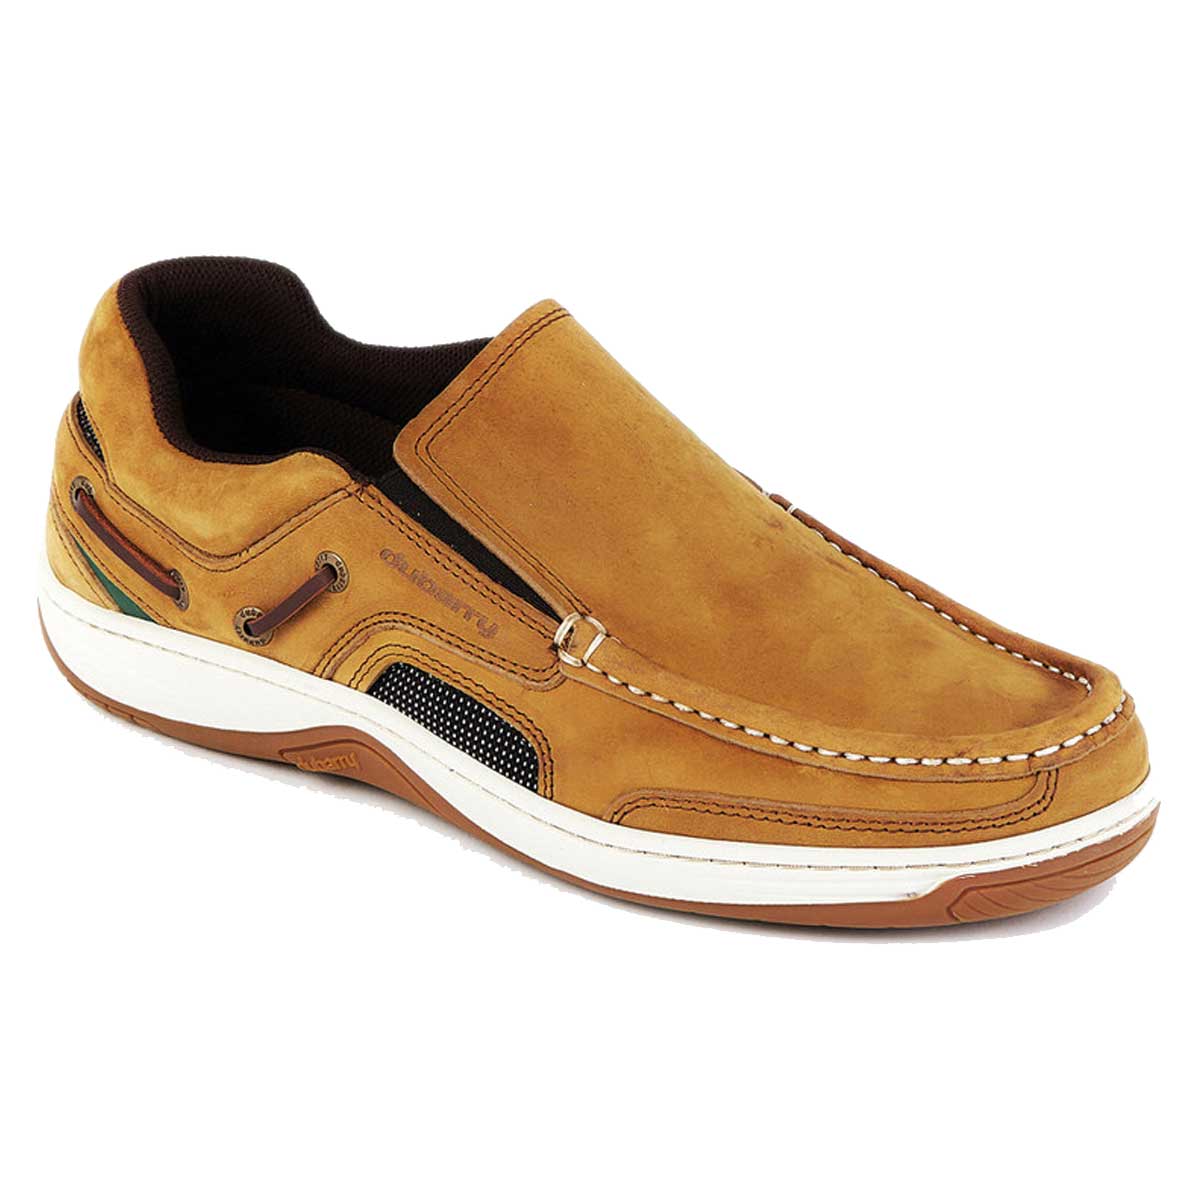 DUBARRY Men's Yacht Deck Shoes - Loafer - Brown Nubuck